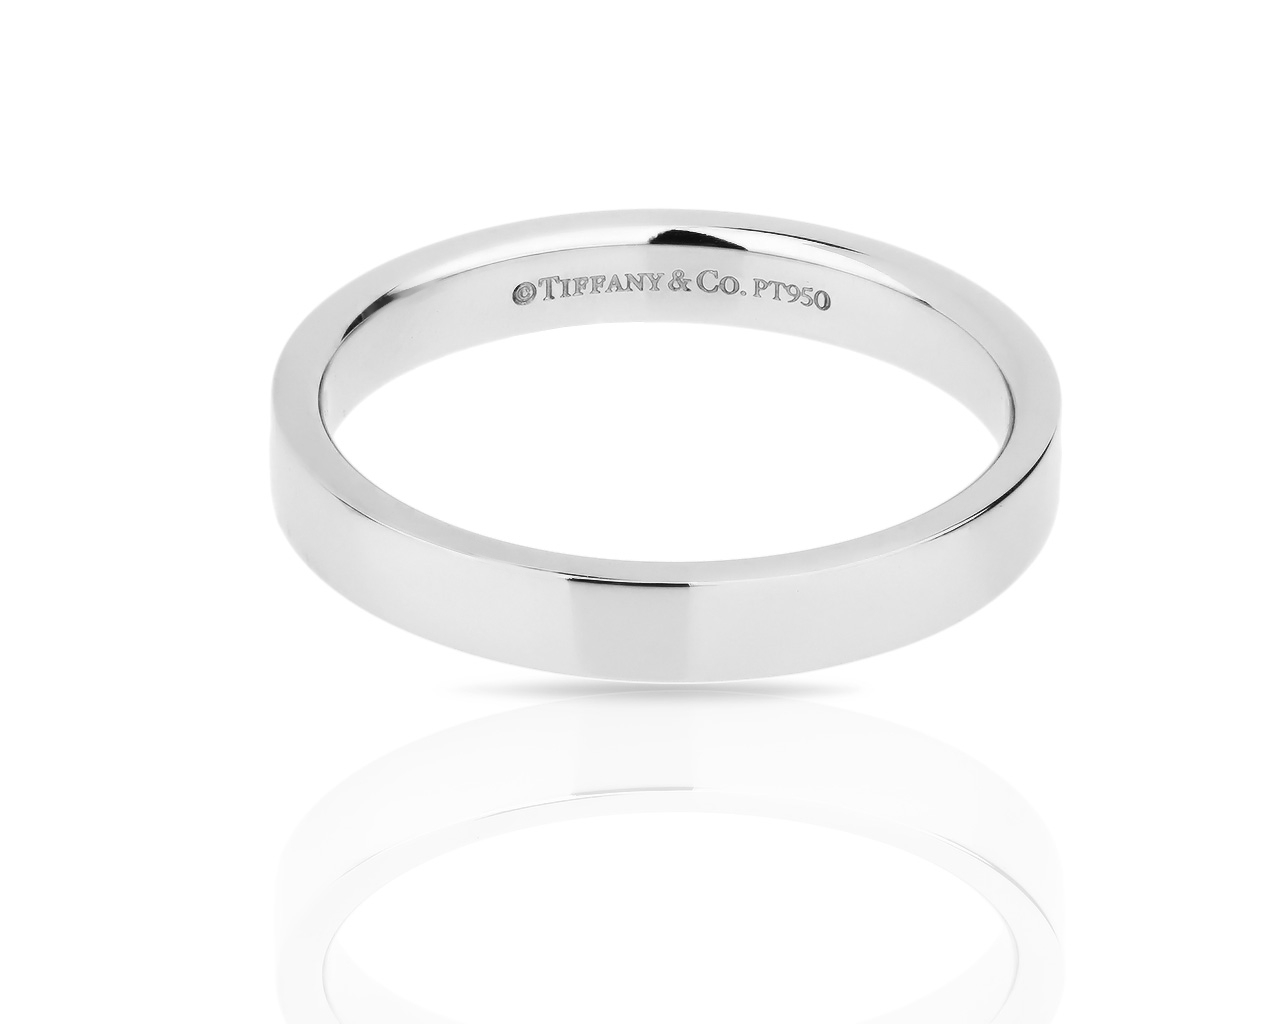 Утонченное платиновое кольцо Tiffany & Co Flat